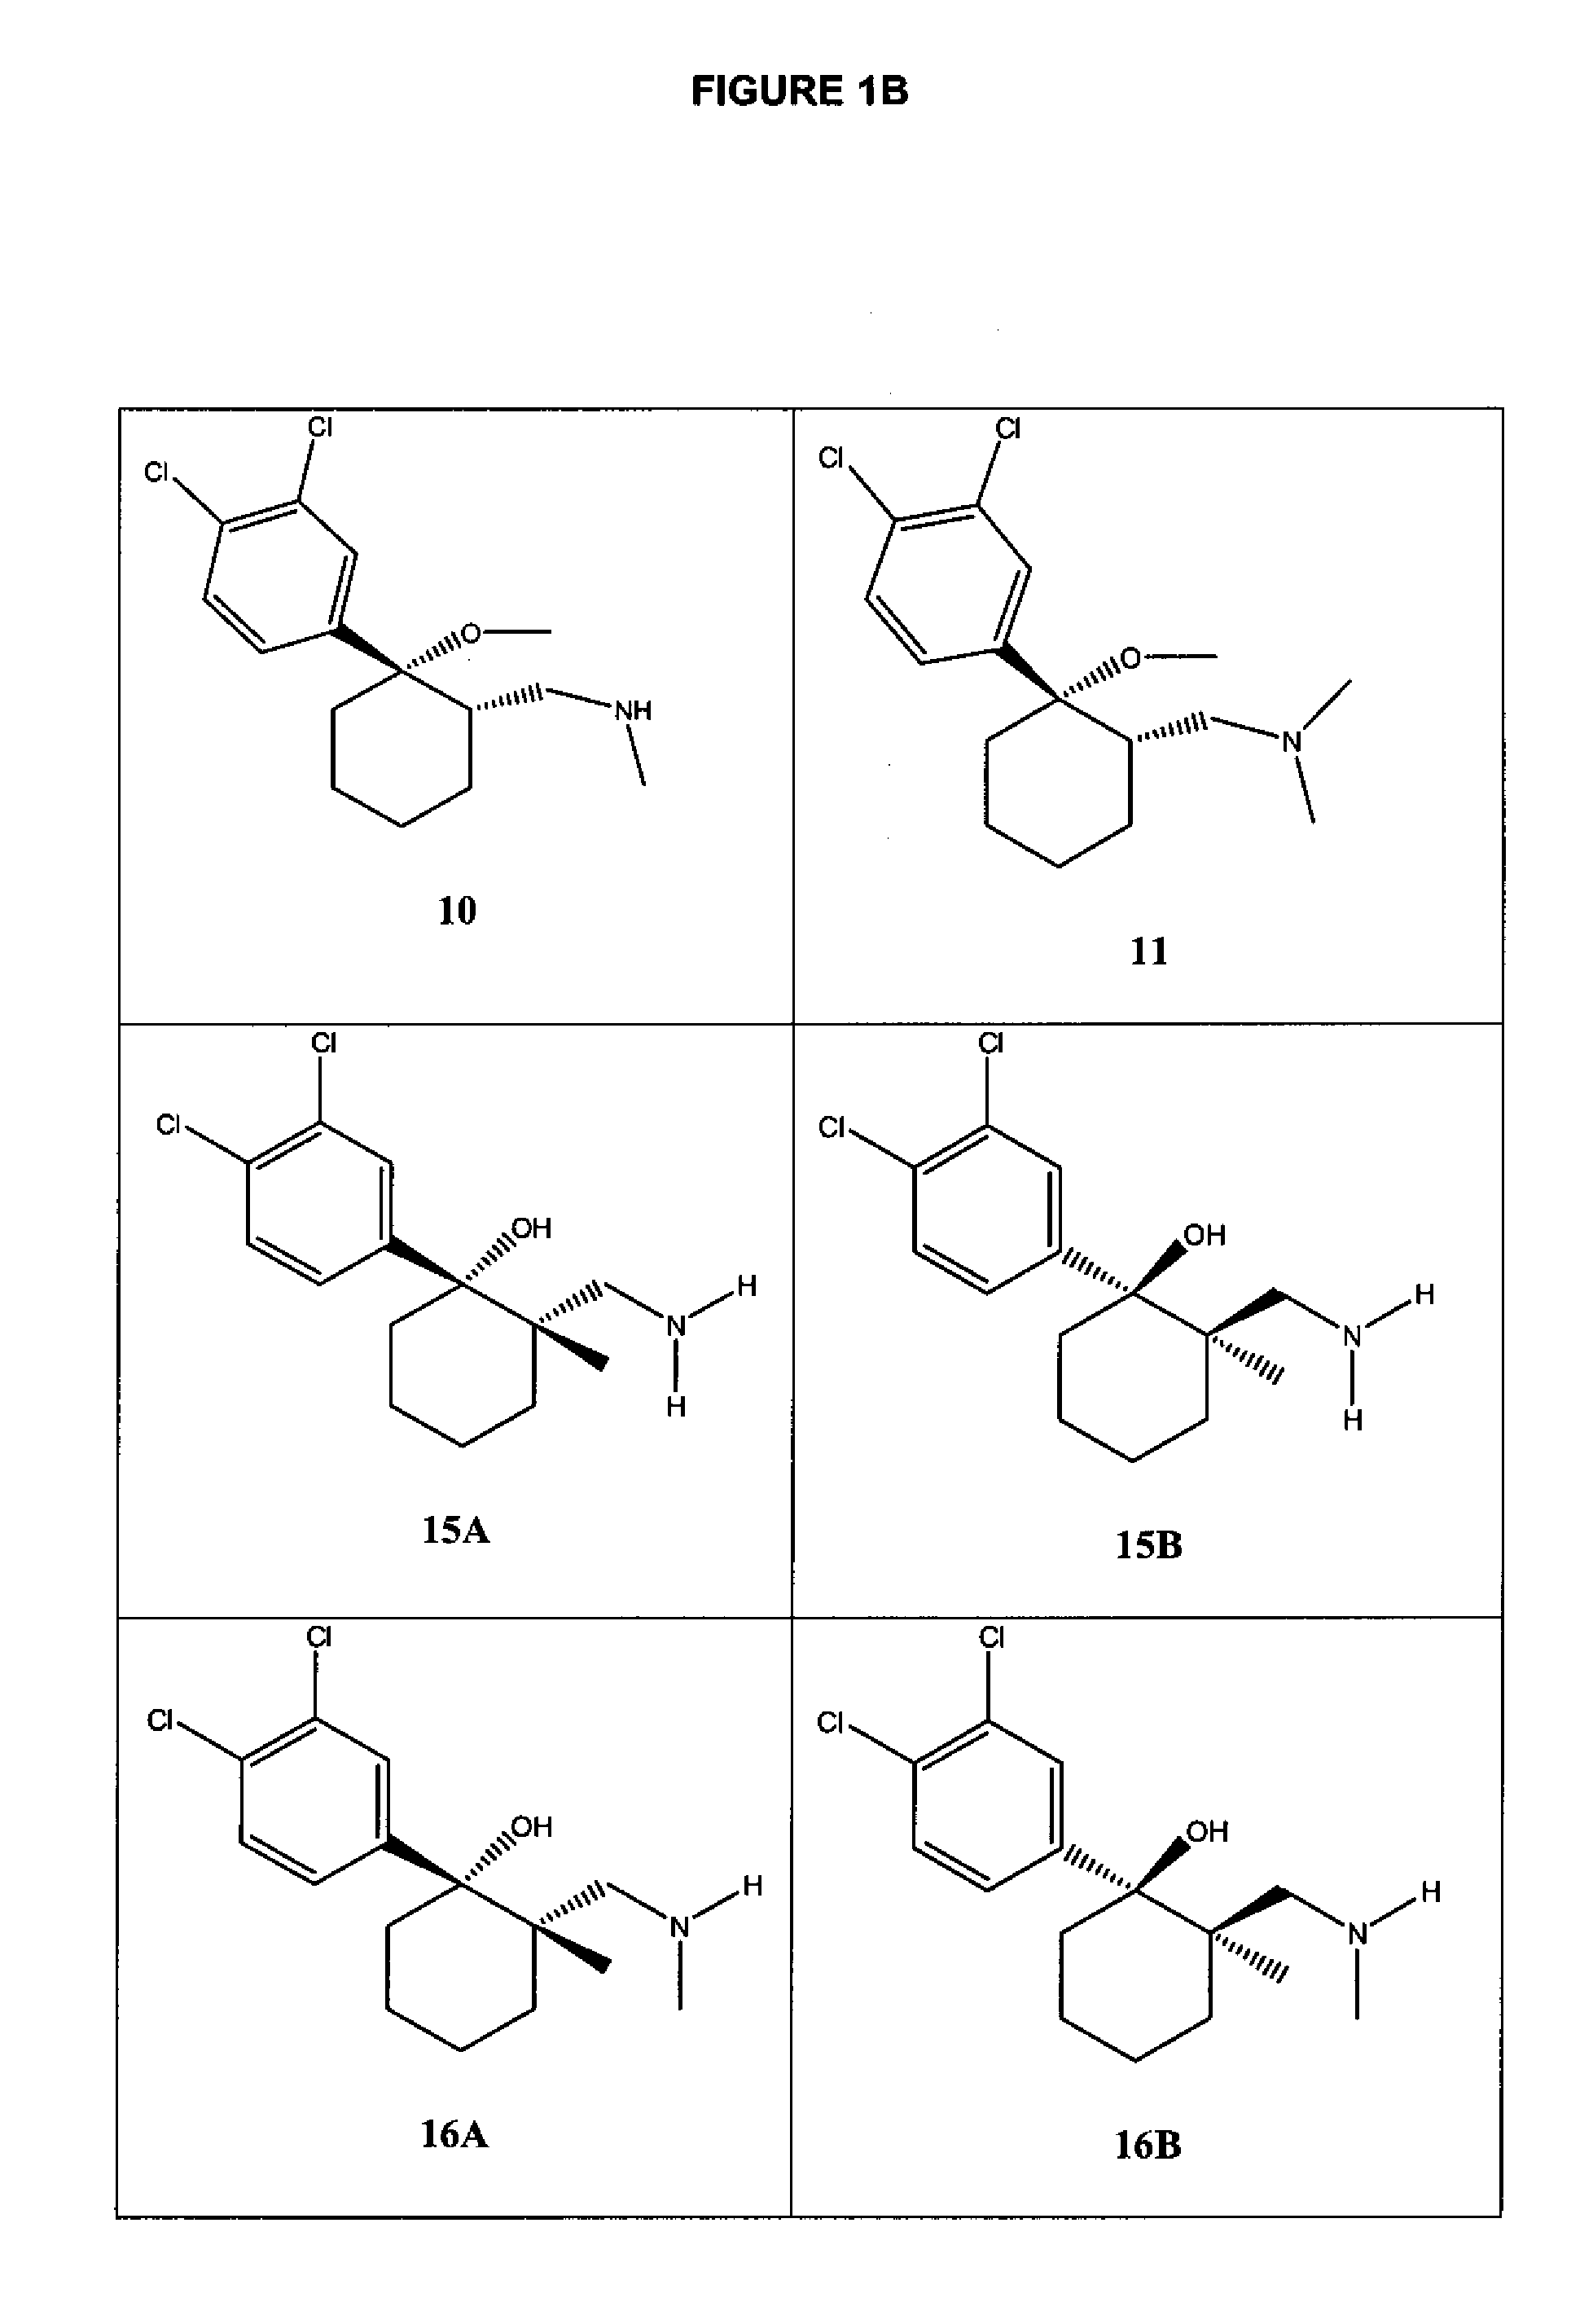 Phenyl substituted cycloalkylamines as monoamine reuptake inhibitors